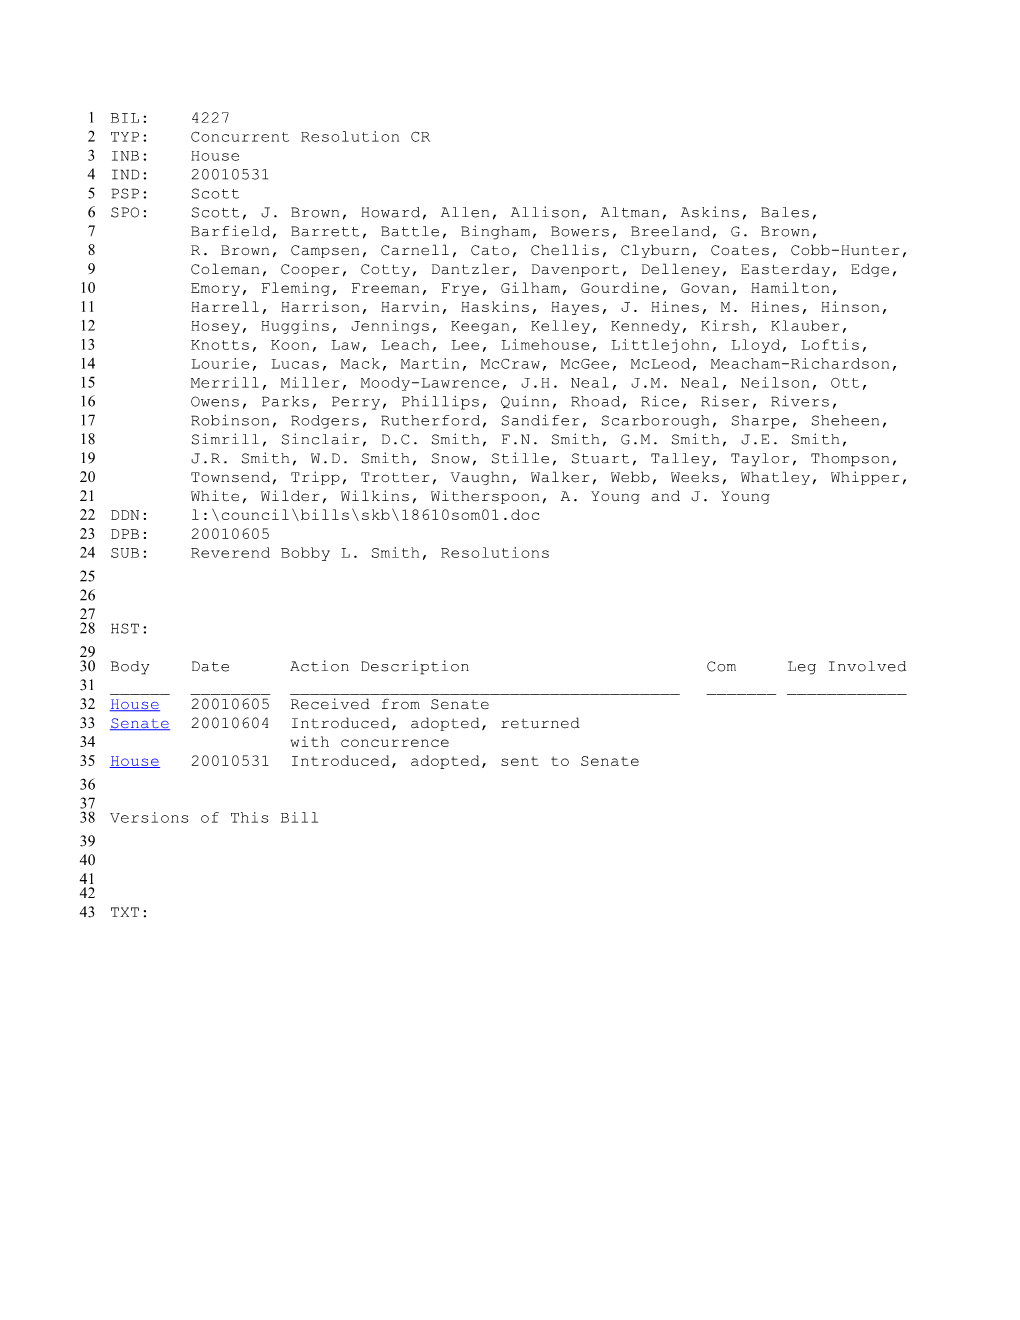 2001-2002 Bill 4227: Reverend Bobby L. Smith, Resolutions - South Carolina Legislature Online